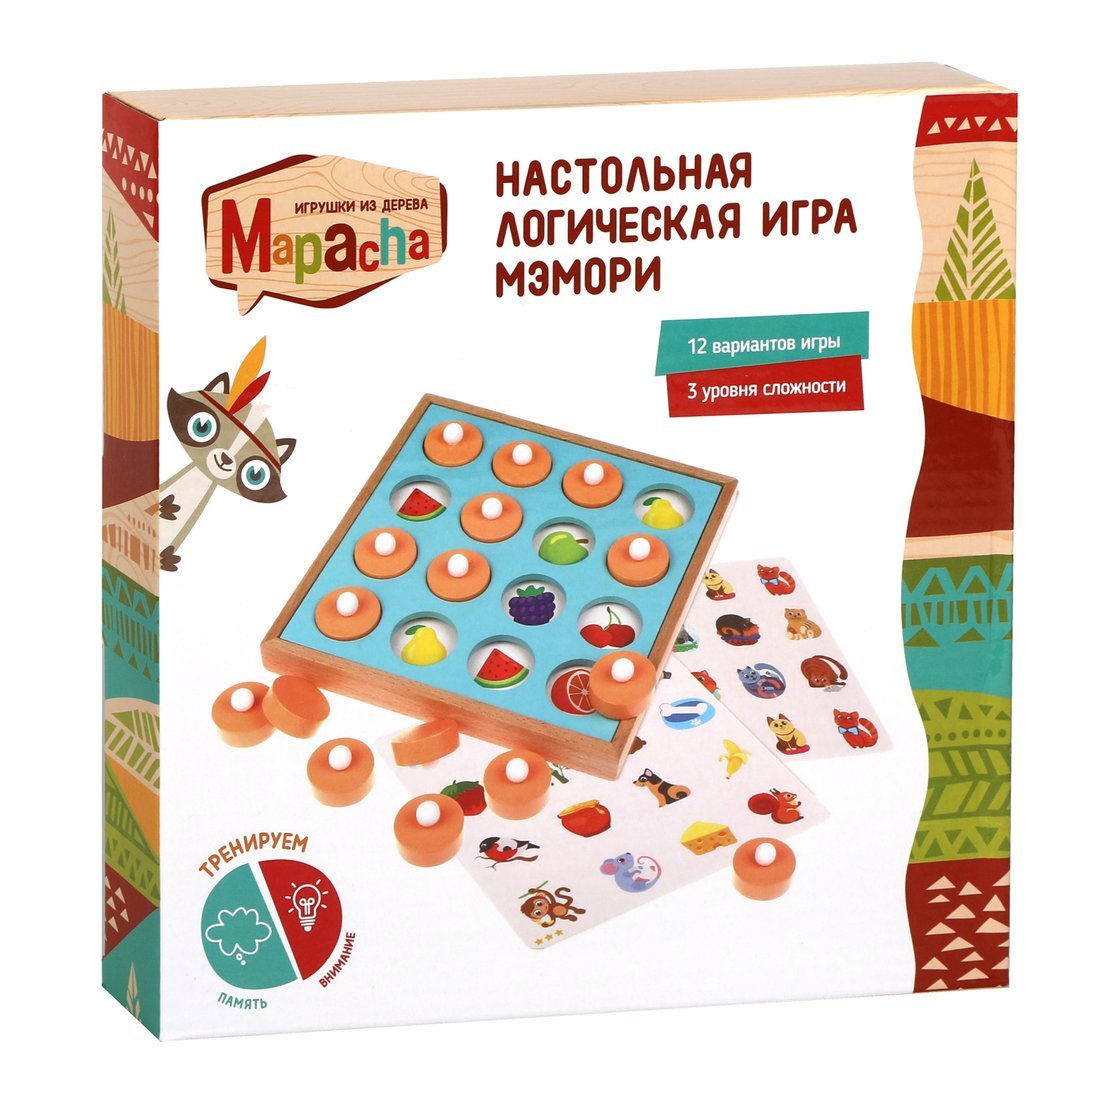 Игра 76844 Мэмори на тренировку памяти Mapacha - Санкт-Петербург 